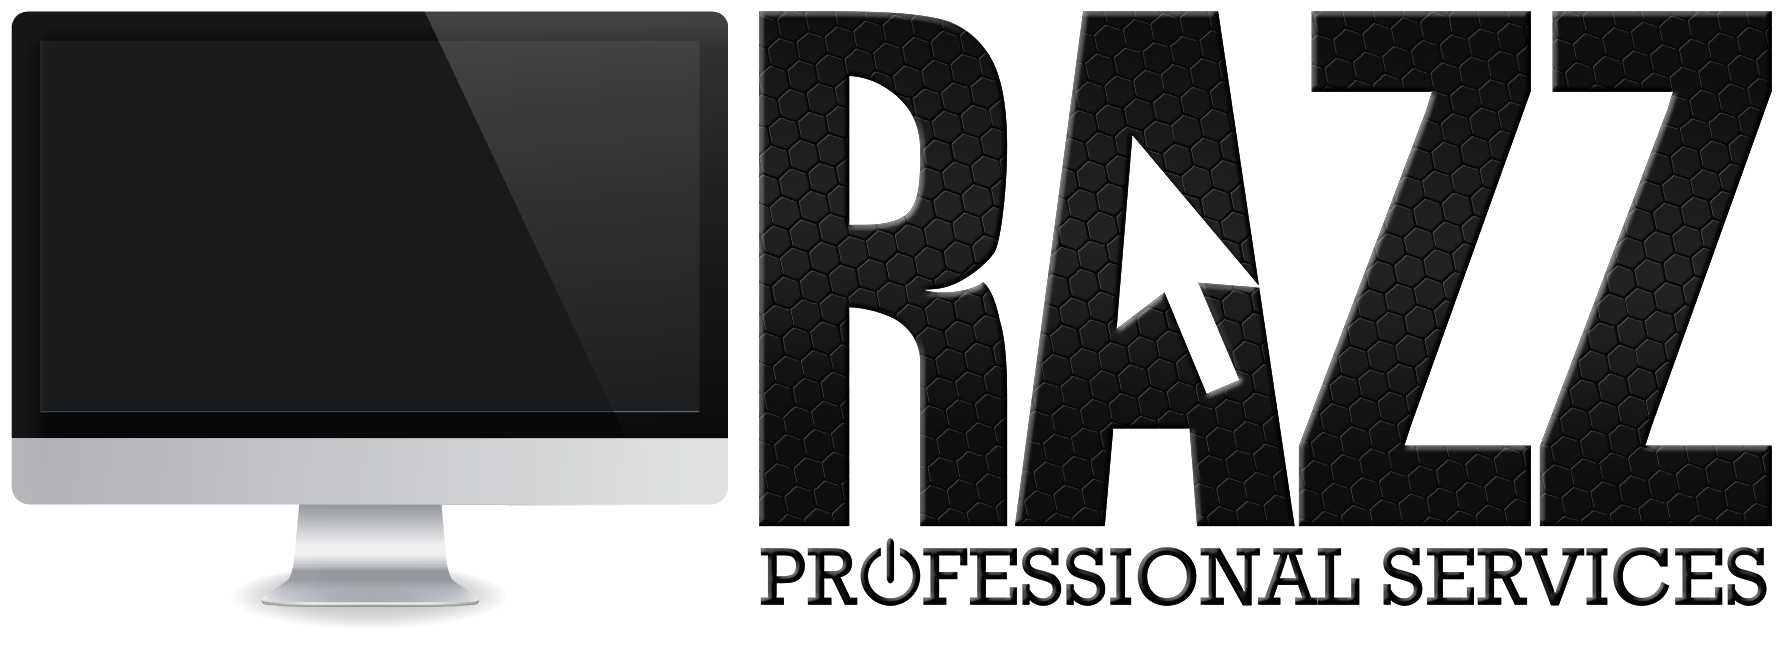 Razz Professional Services, Inc.